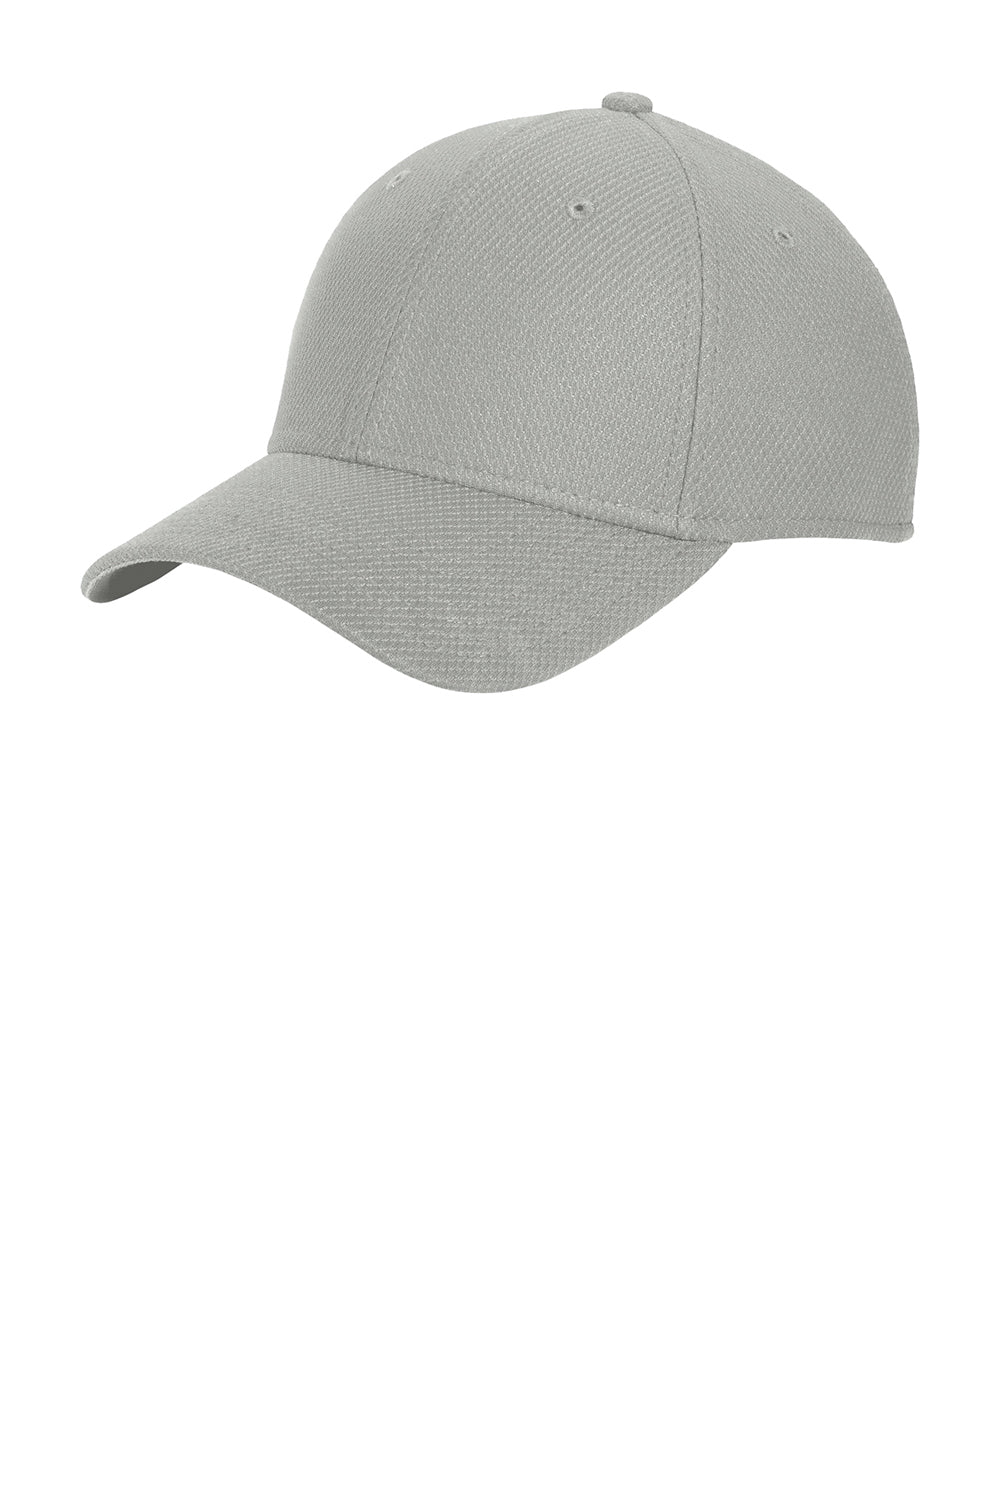 New Era NE1121 Mens Moisture Wicking Stretch Fit Hat Grey Front